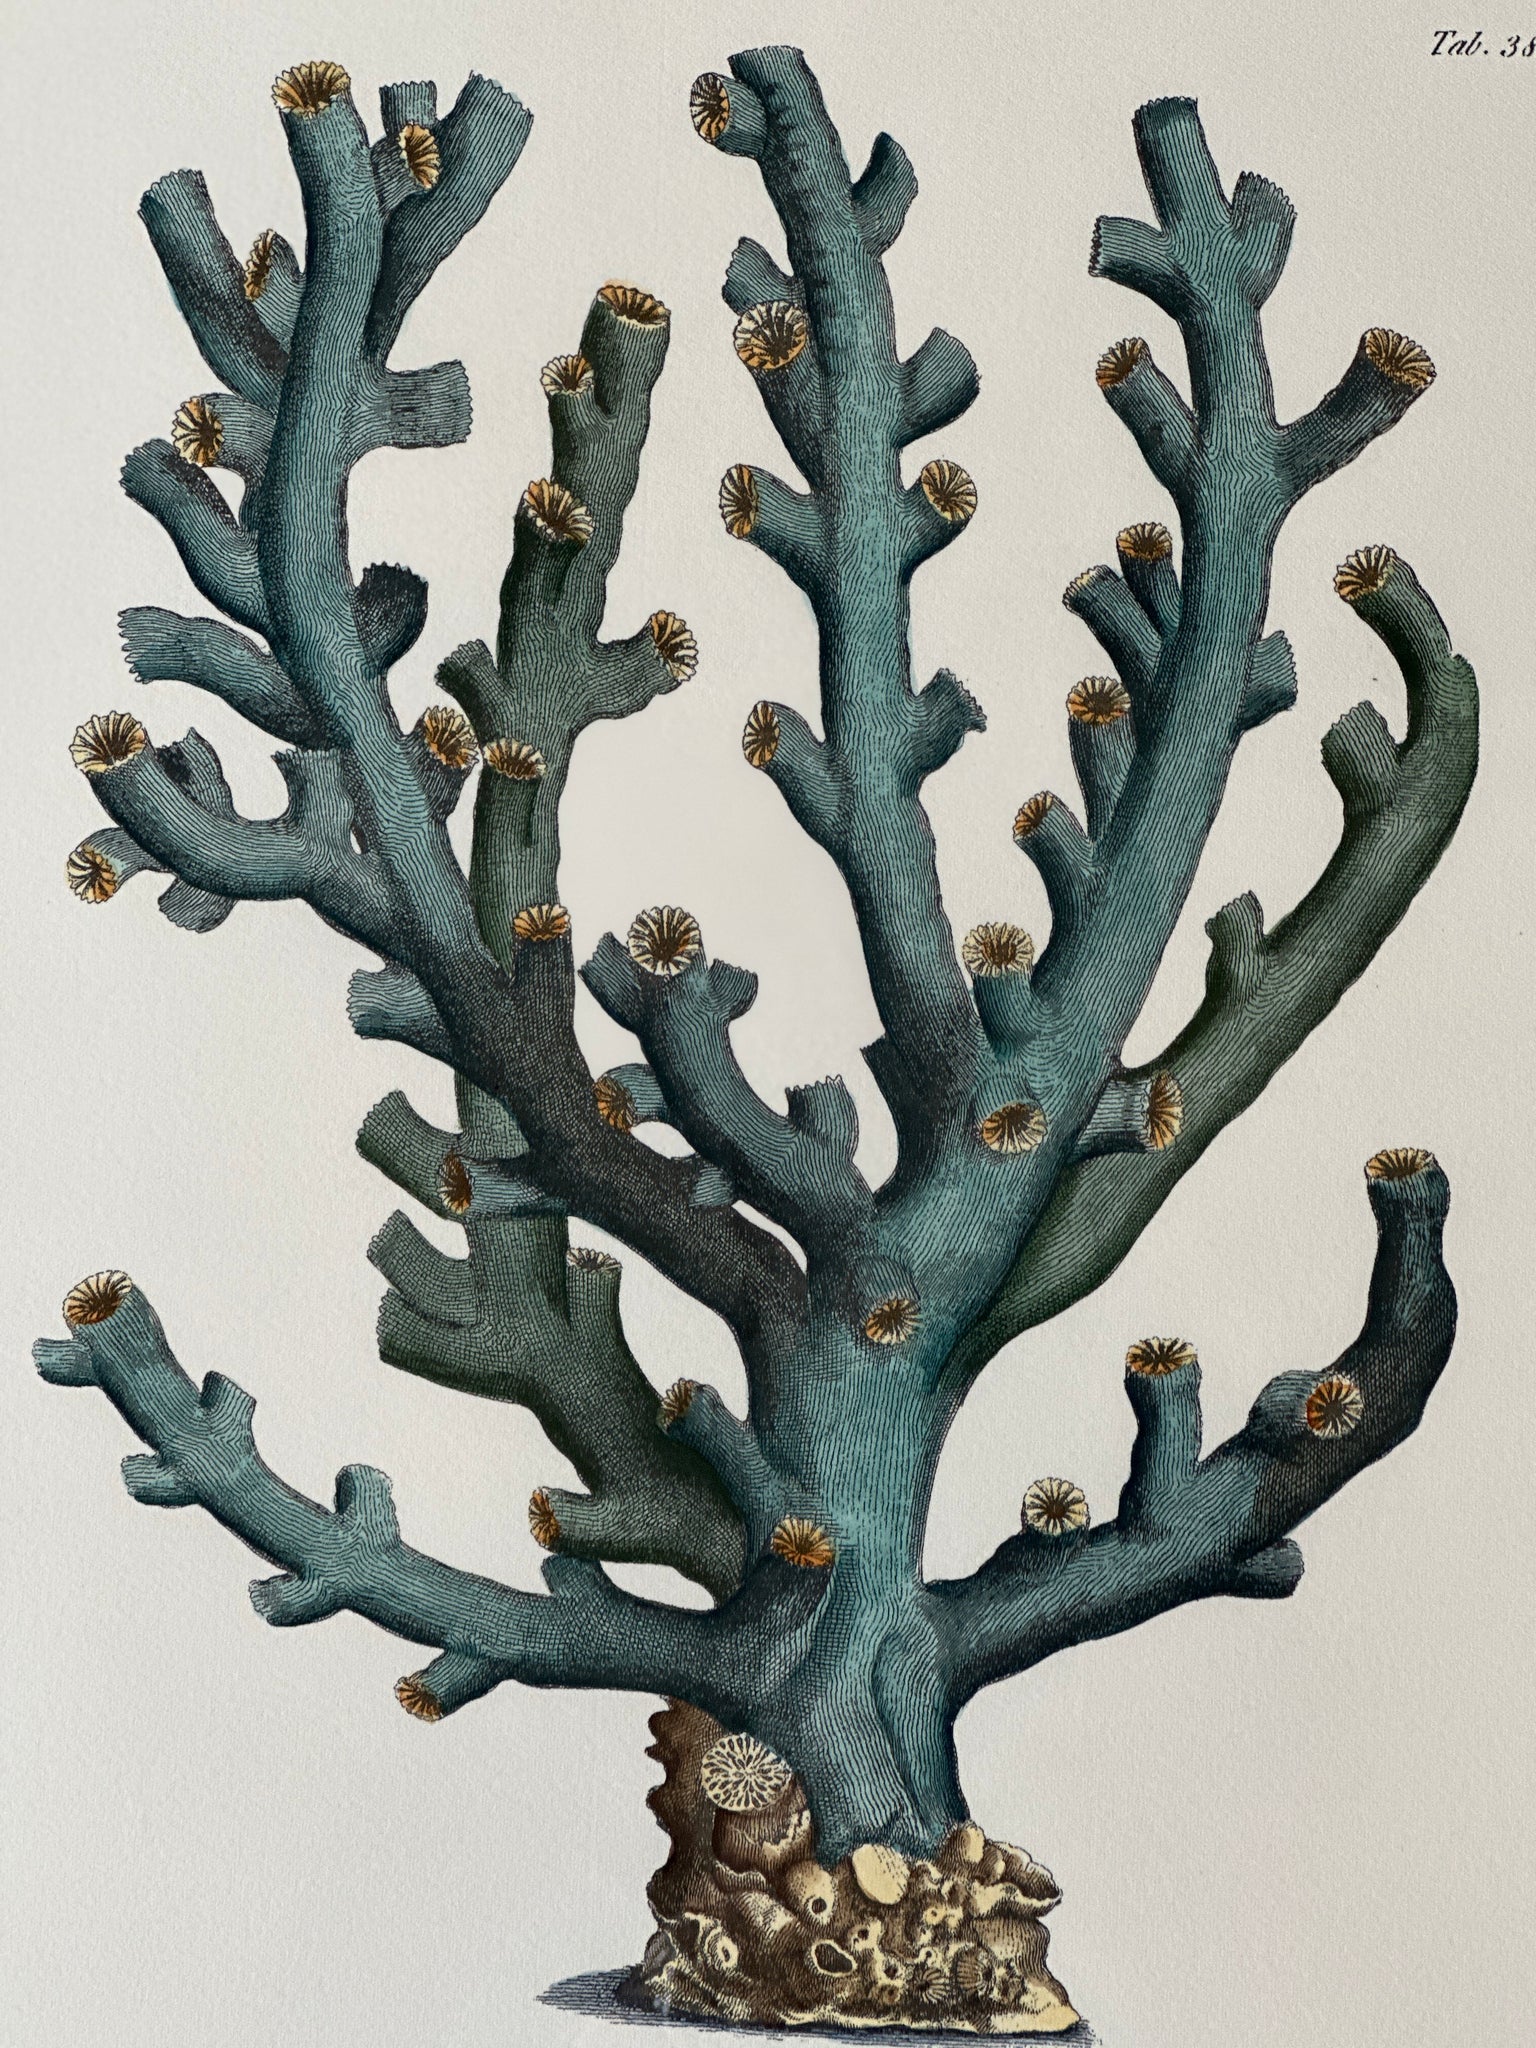 Botanical Prints of Blue Coral